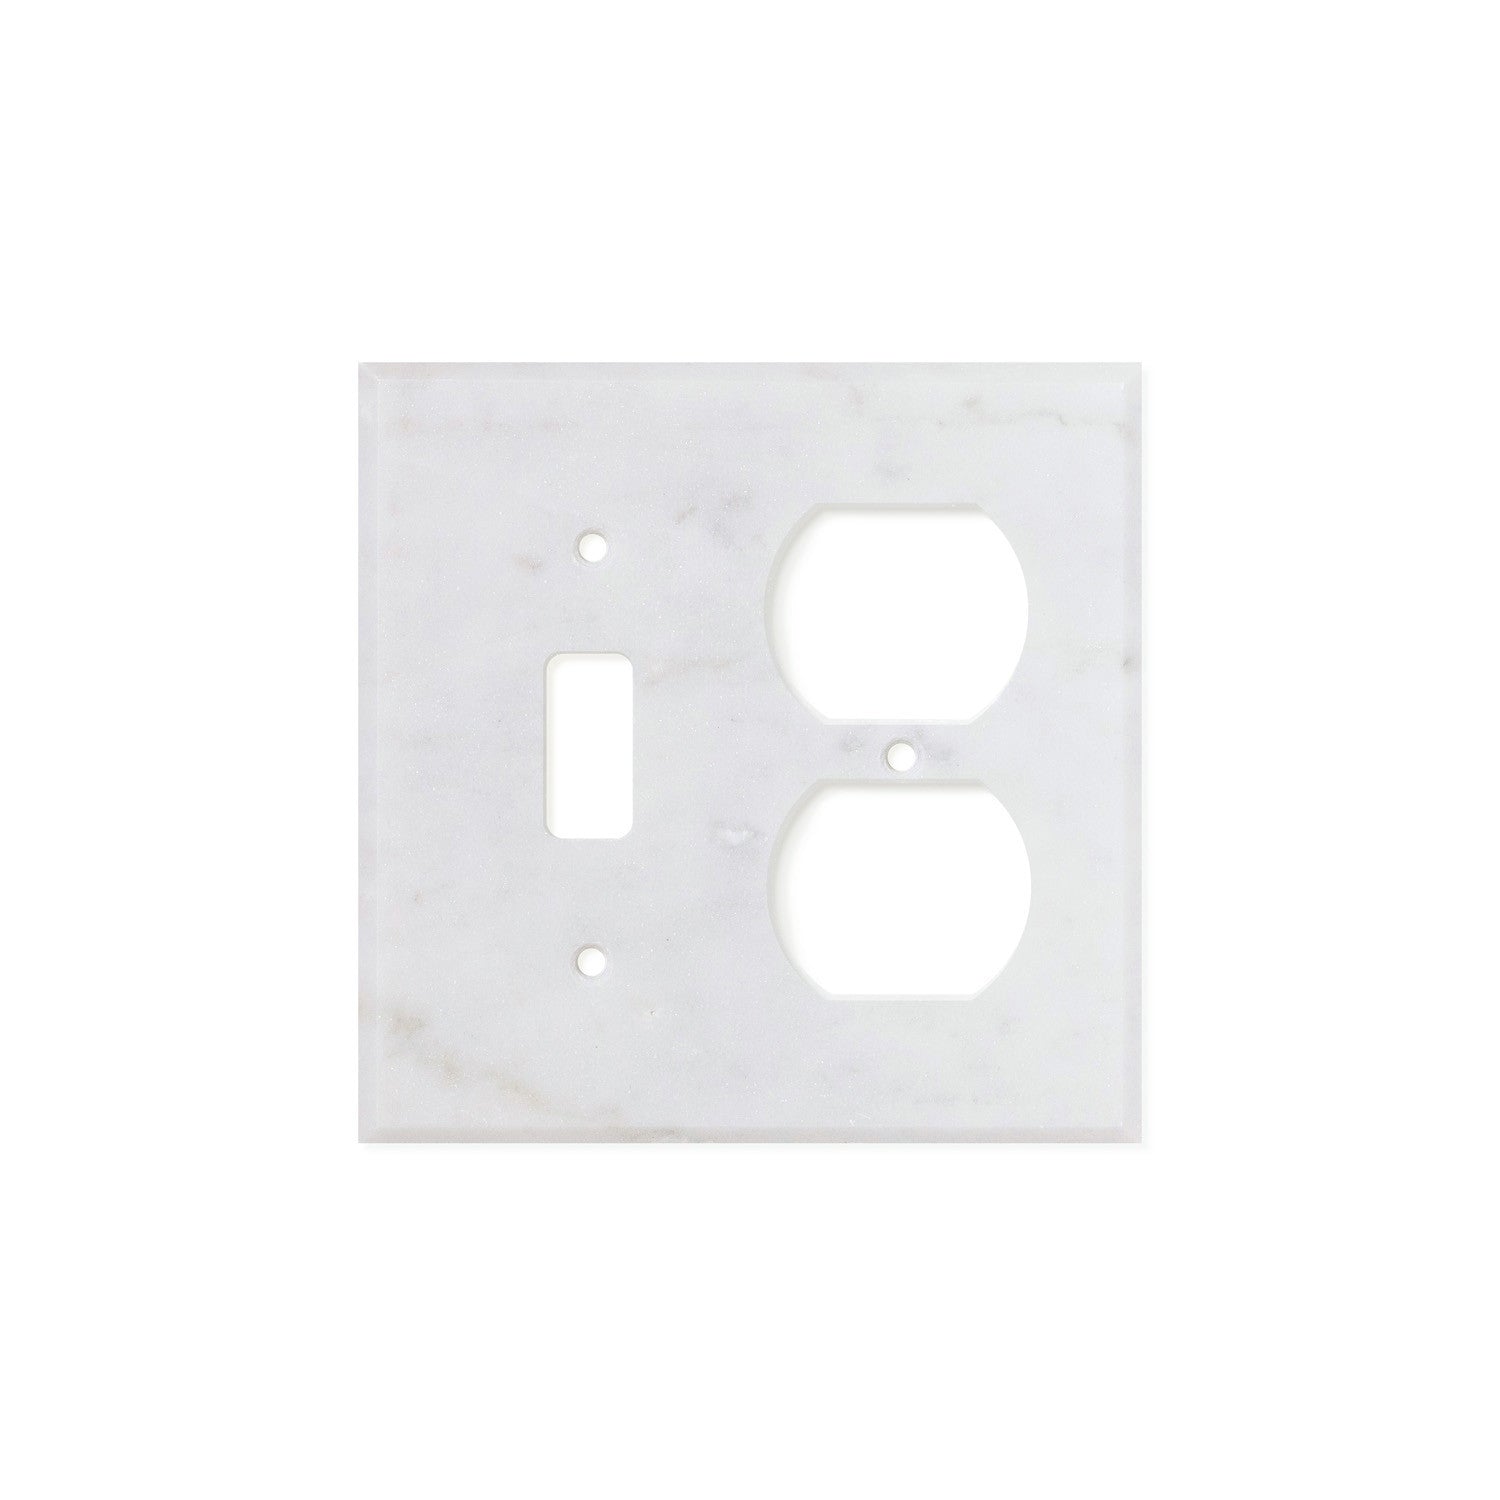 Bianco Carrara (Carrara White) Marble Switch Plate Cover, Honed (TOGGLE DUPLEX) - Tilephile